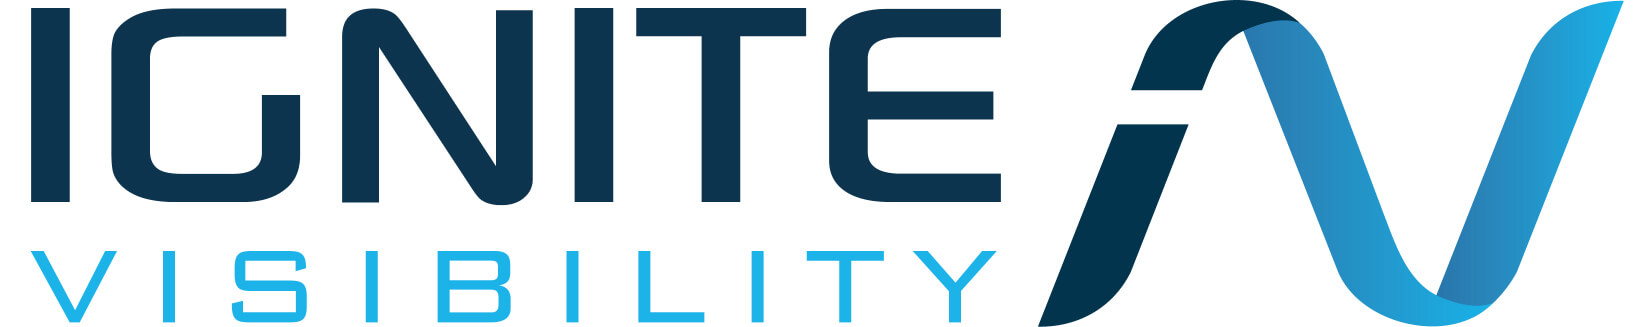 Top Enterprise SEO Agency Logo: Ignite Visibility